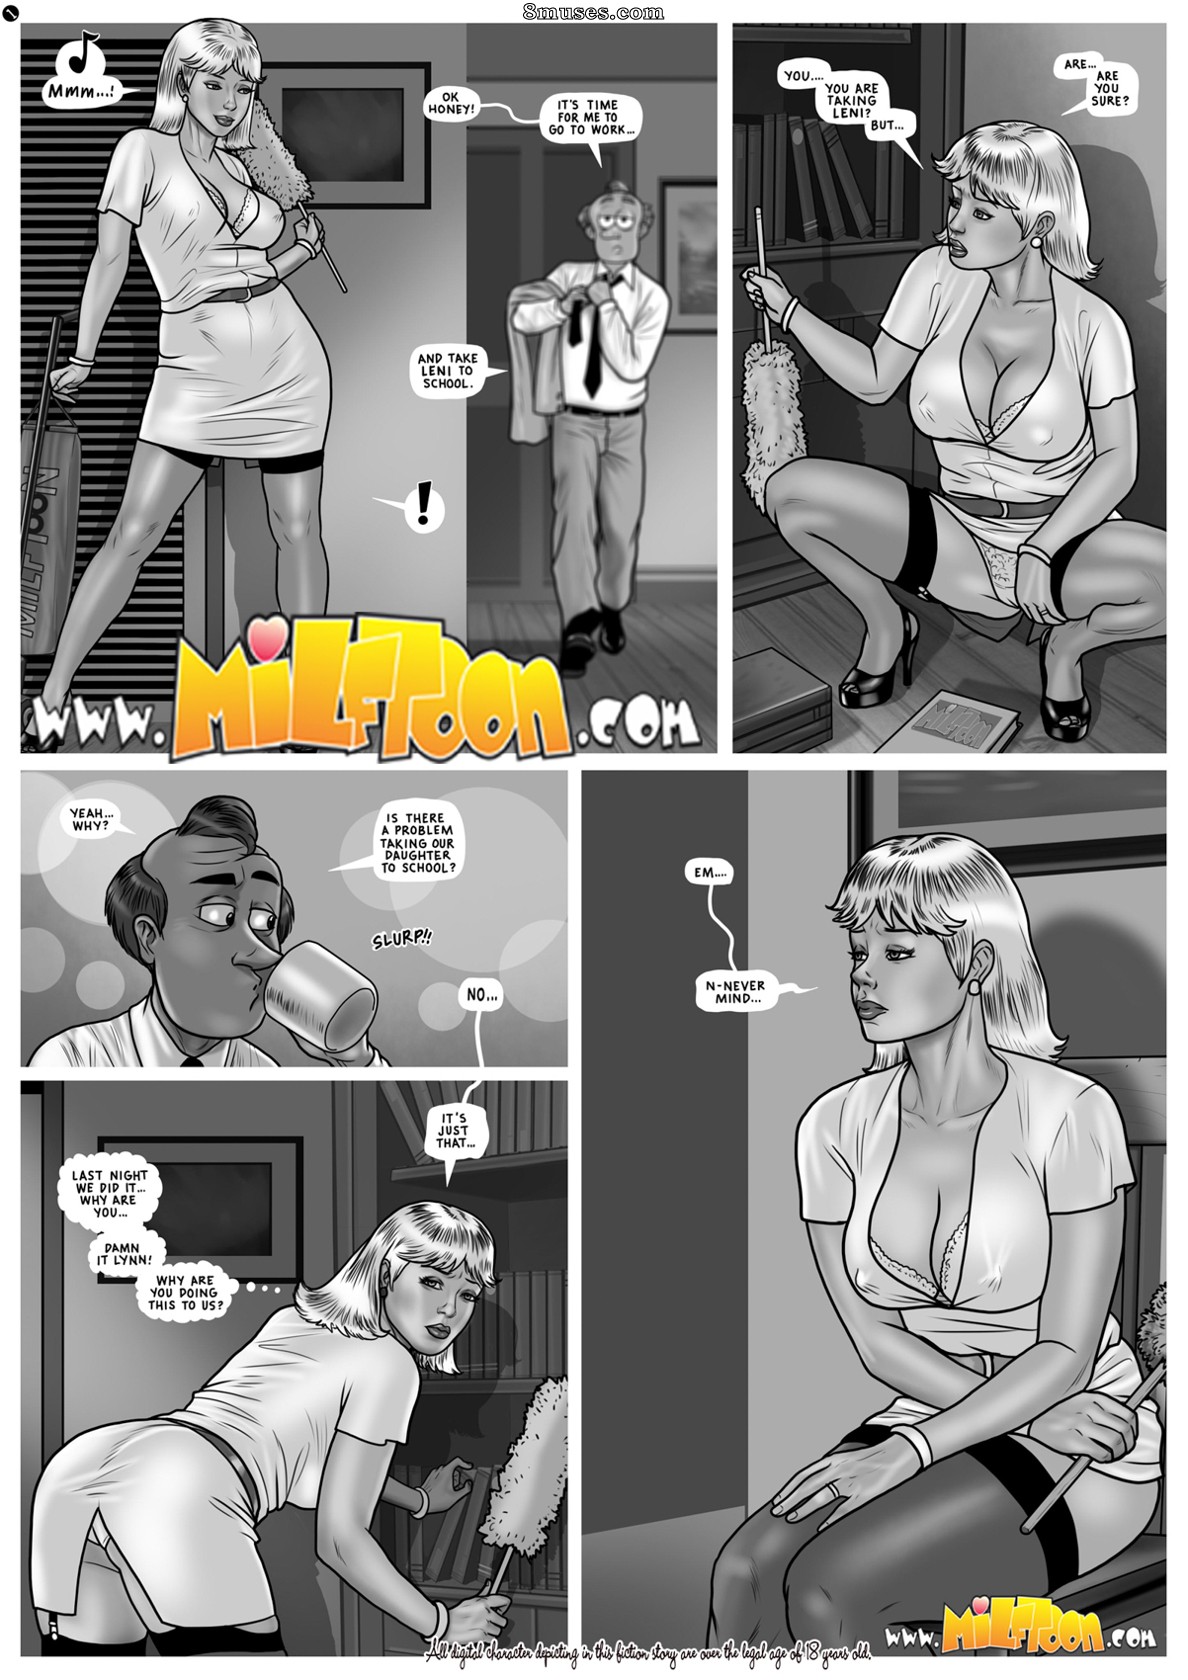 Pornographic comic strips